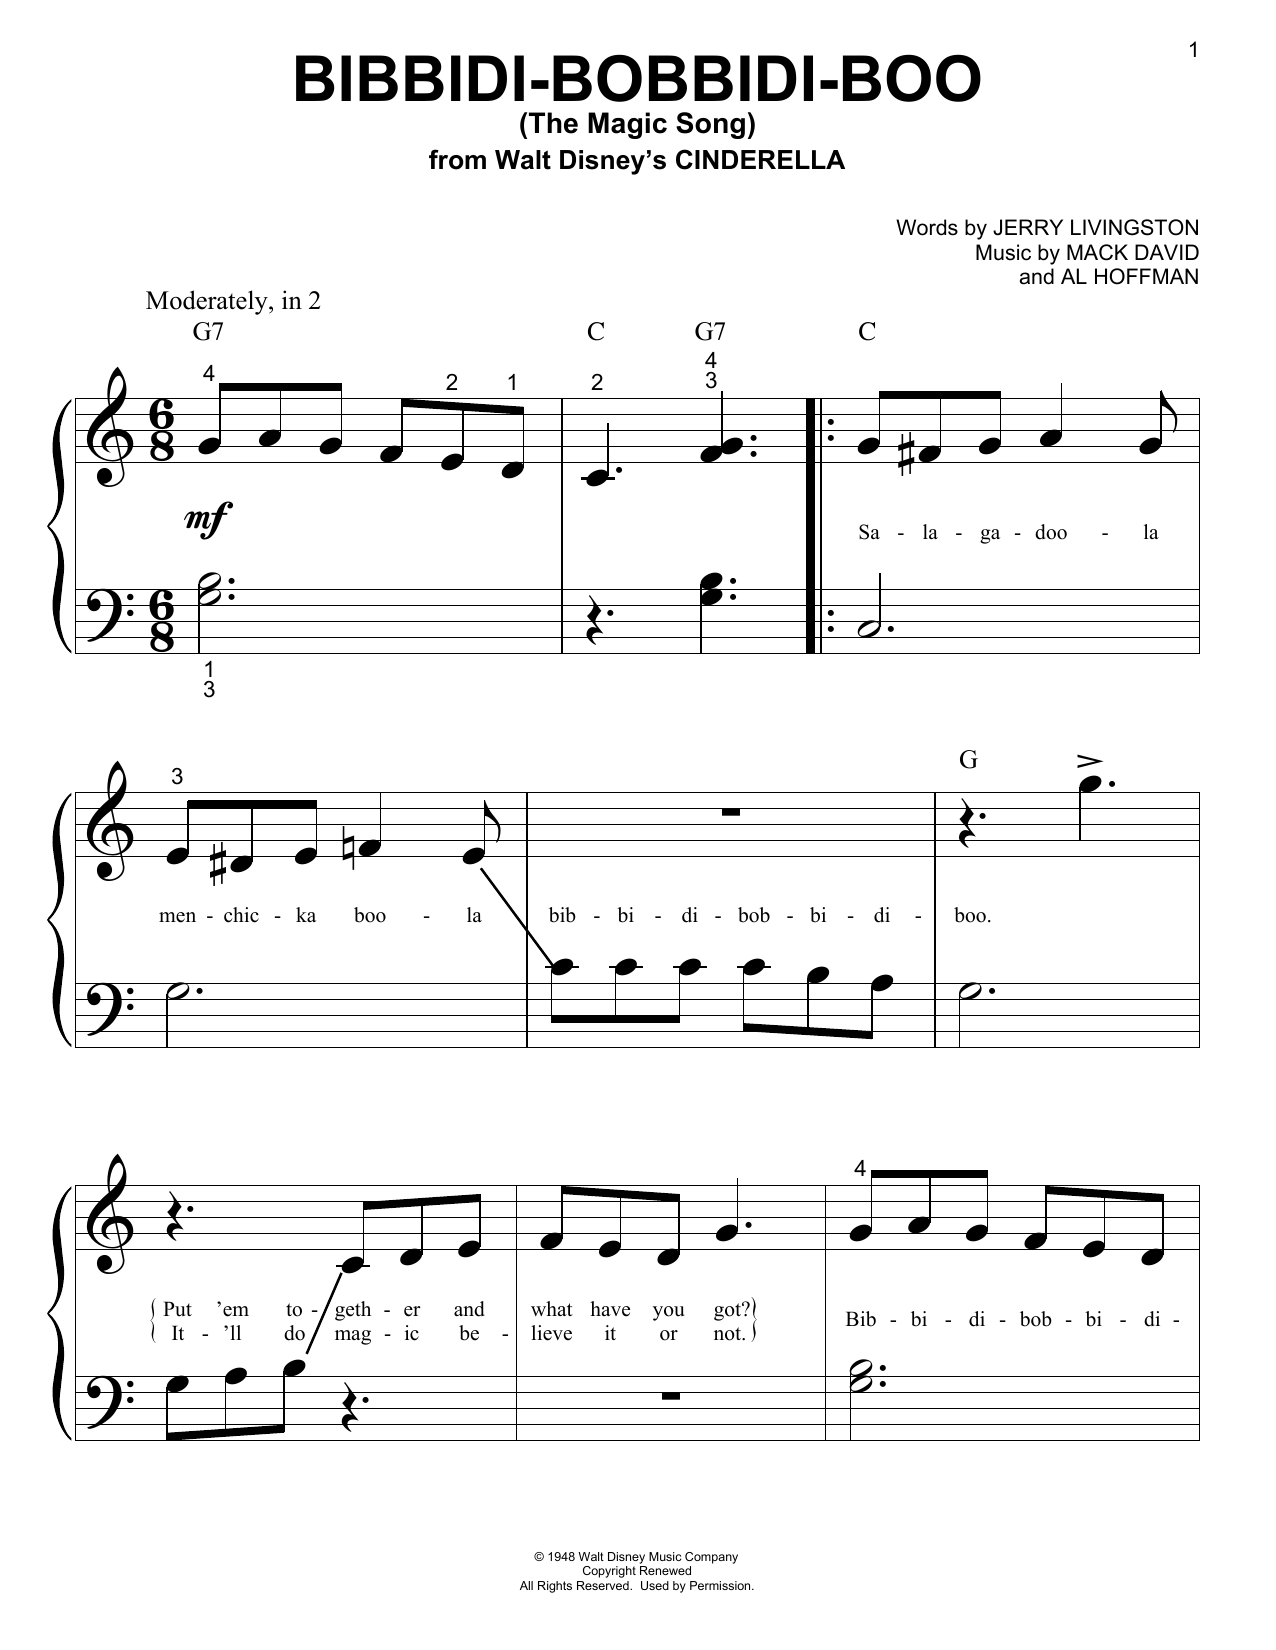 Jerry Livingston Bibbidi-Bobbidi-Boo (The Magic Song) Sheet Music Notes & Chords for Piano (Big Notes) - Download or Print PDF